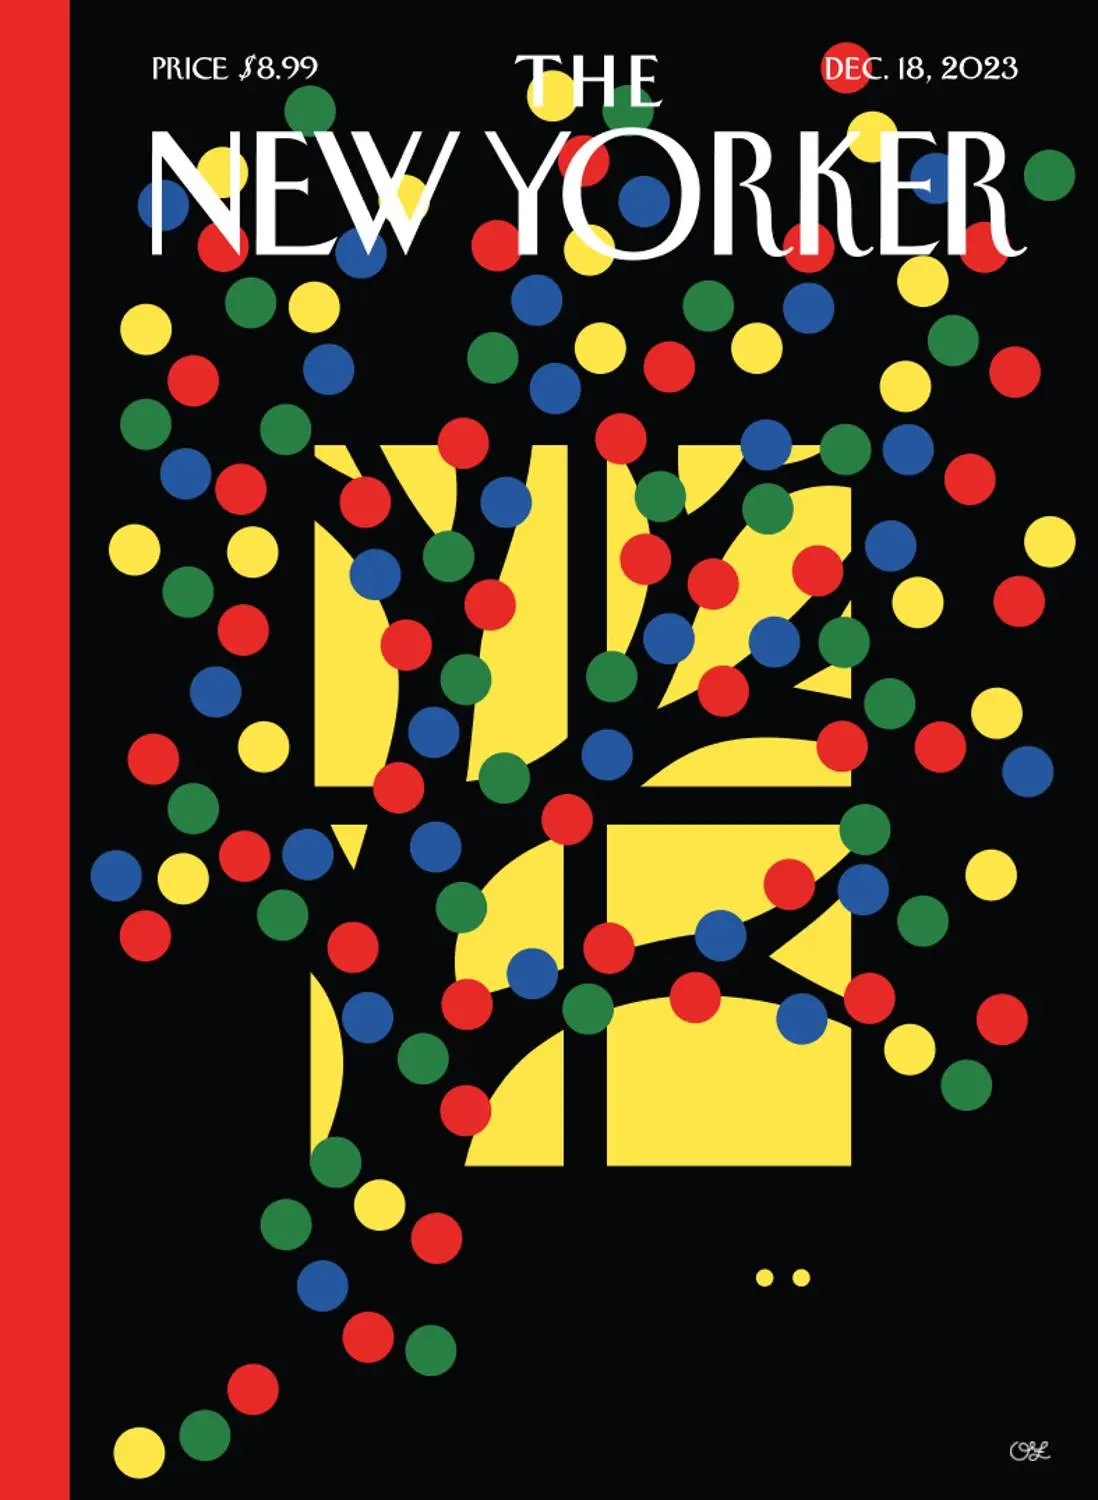 The New Yorker December 18, 2023 / AvaxHome